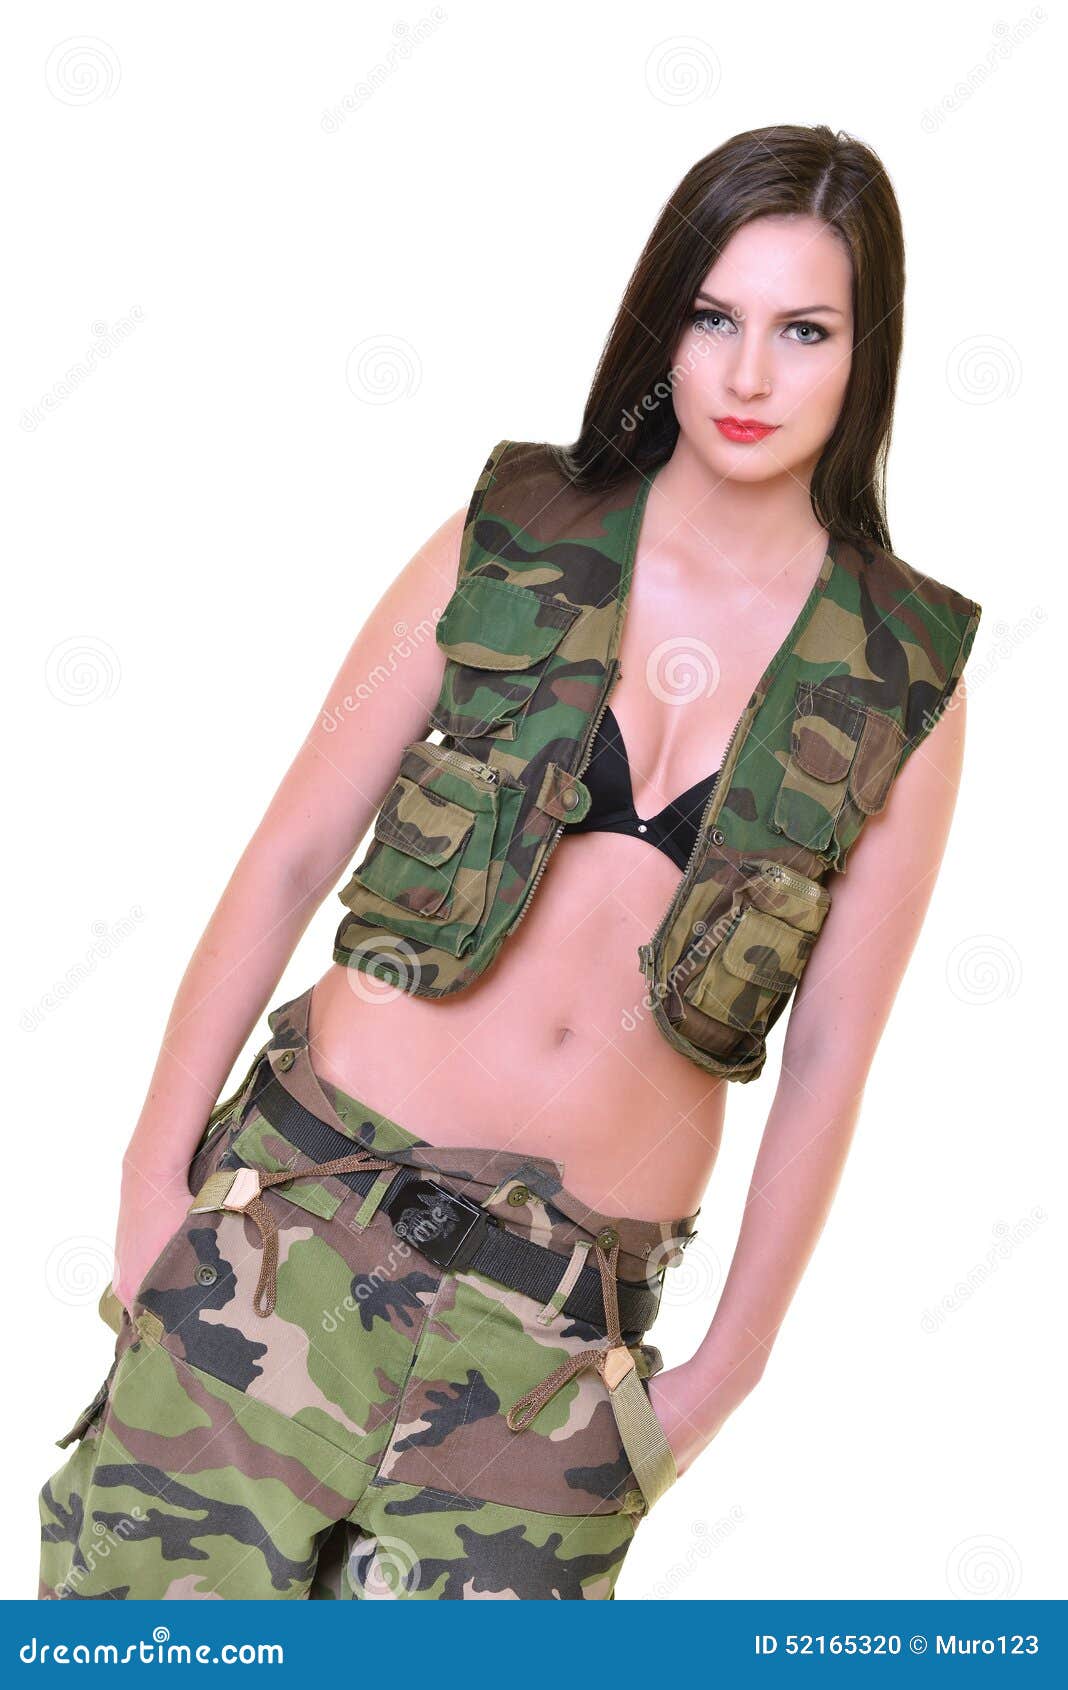 sexy army girl in iraq photo